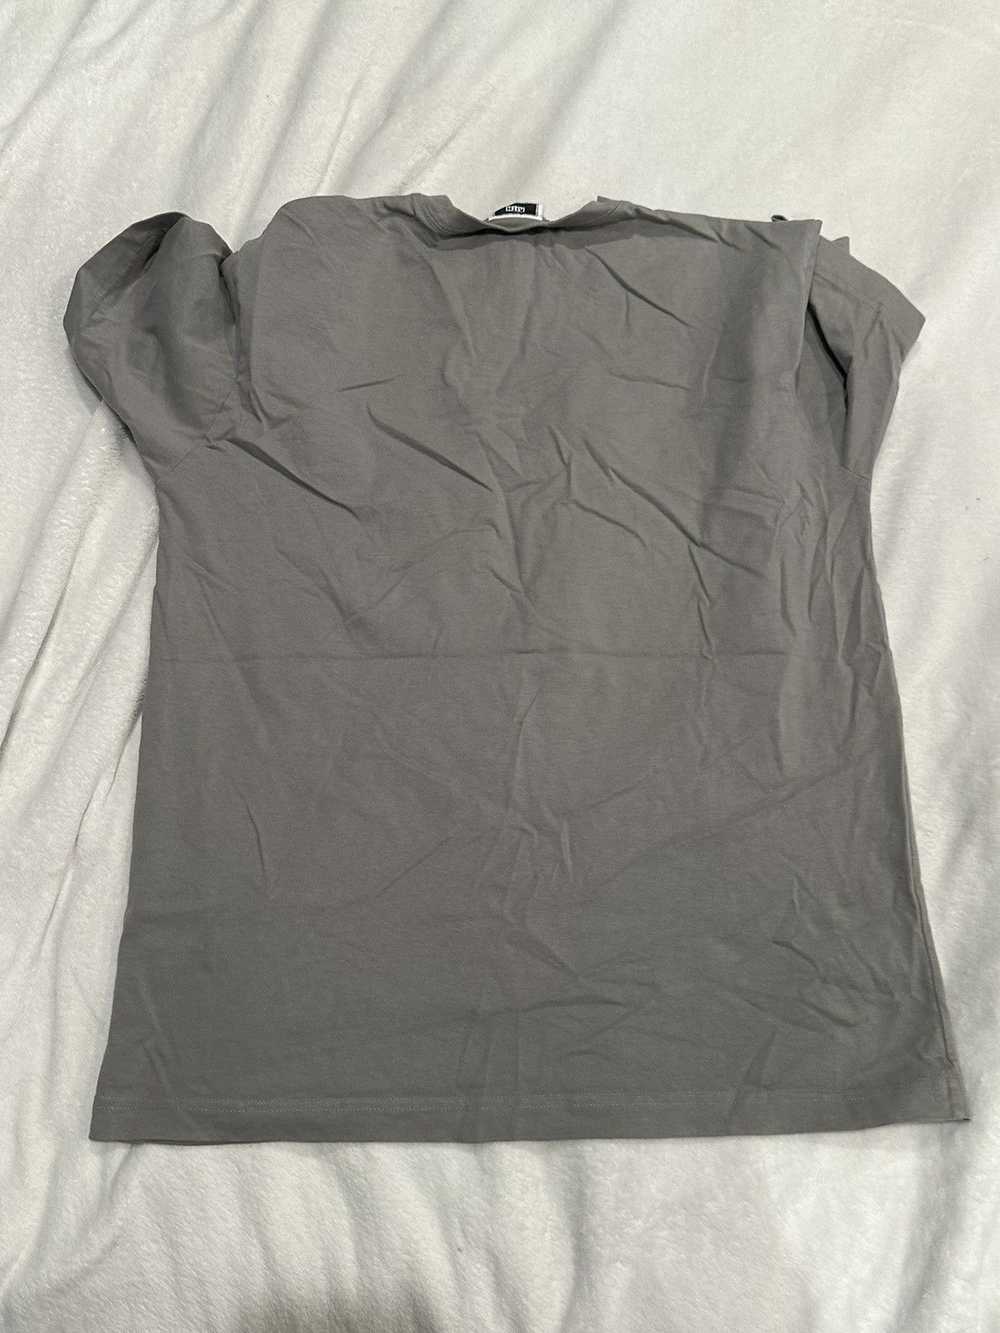 Kith Kith Parts of a Whole NYC T-Shirt - image 3